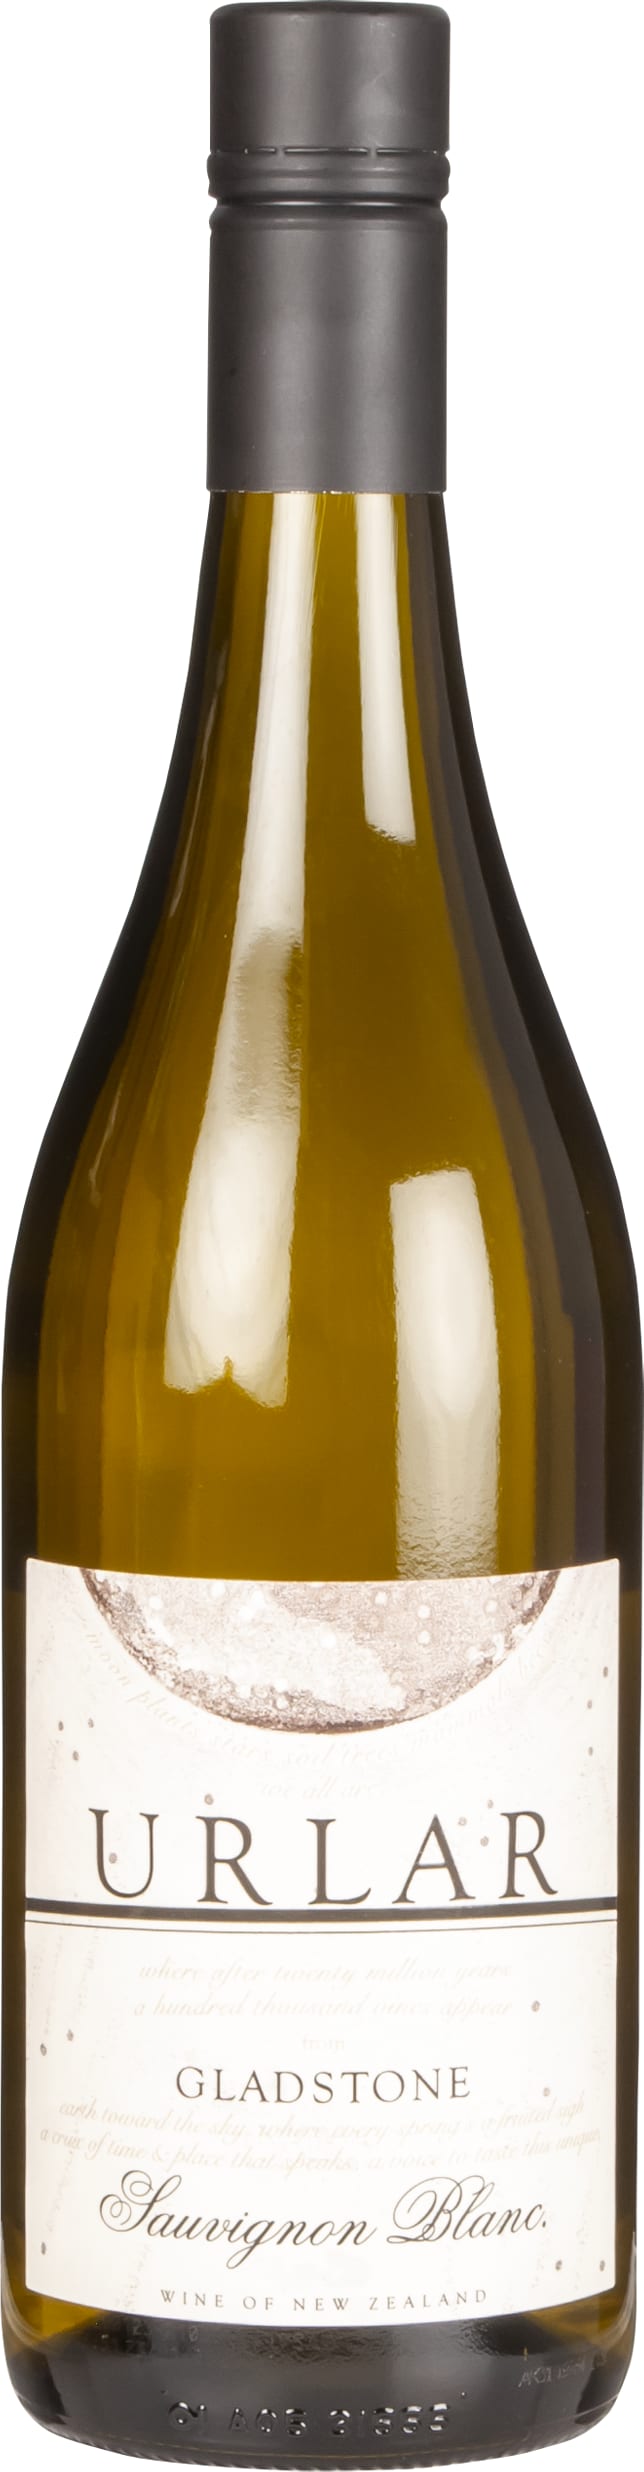 Urlar Organic Sauvignon Blanc 2022 75cl - Buy Urlar Wines from GREAT WINES DIRECT wine shop